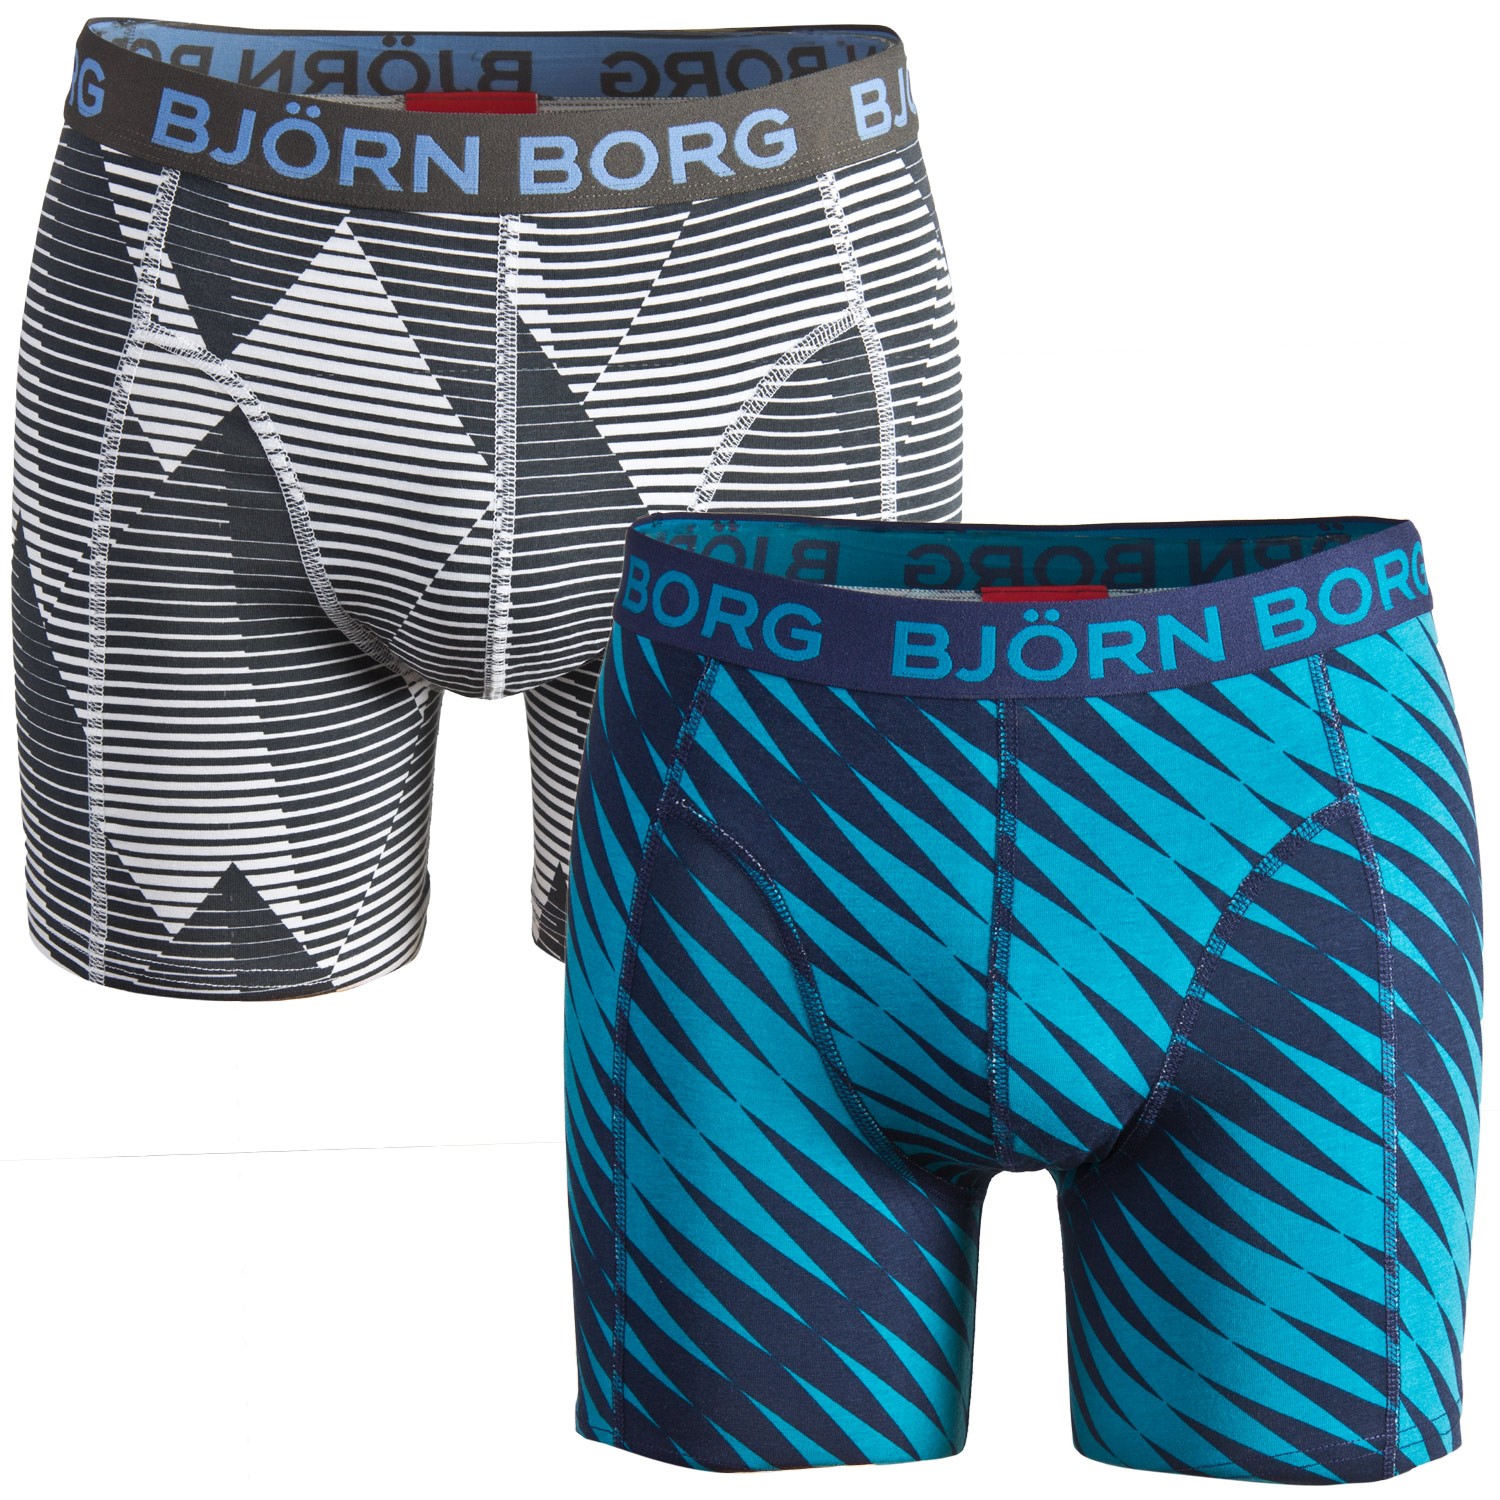 Björn Borg Shorts Ocean Depths